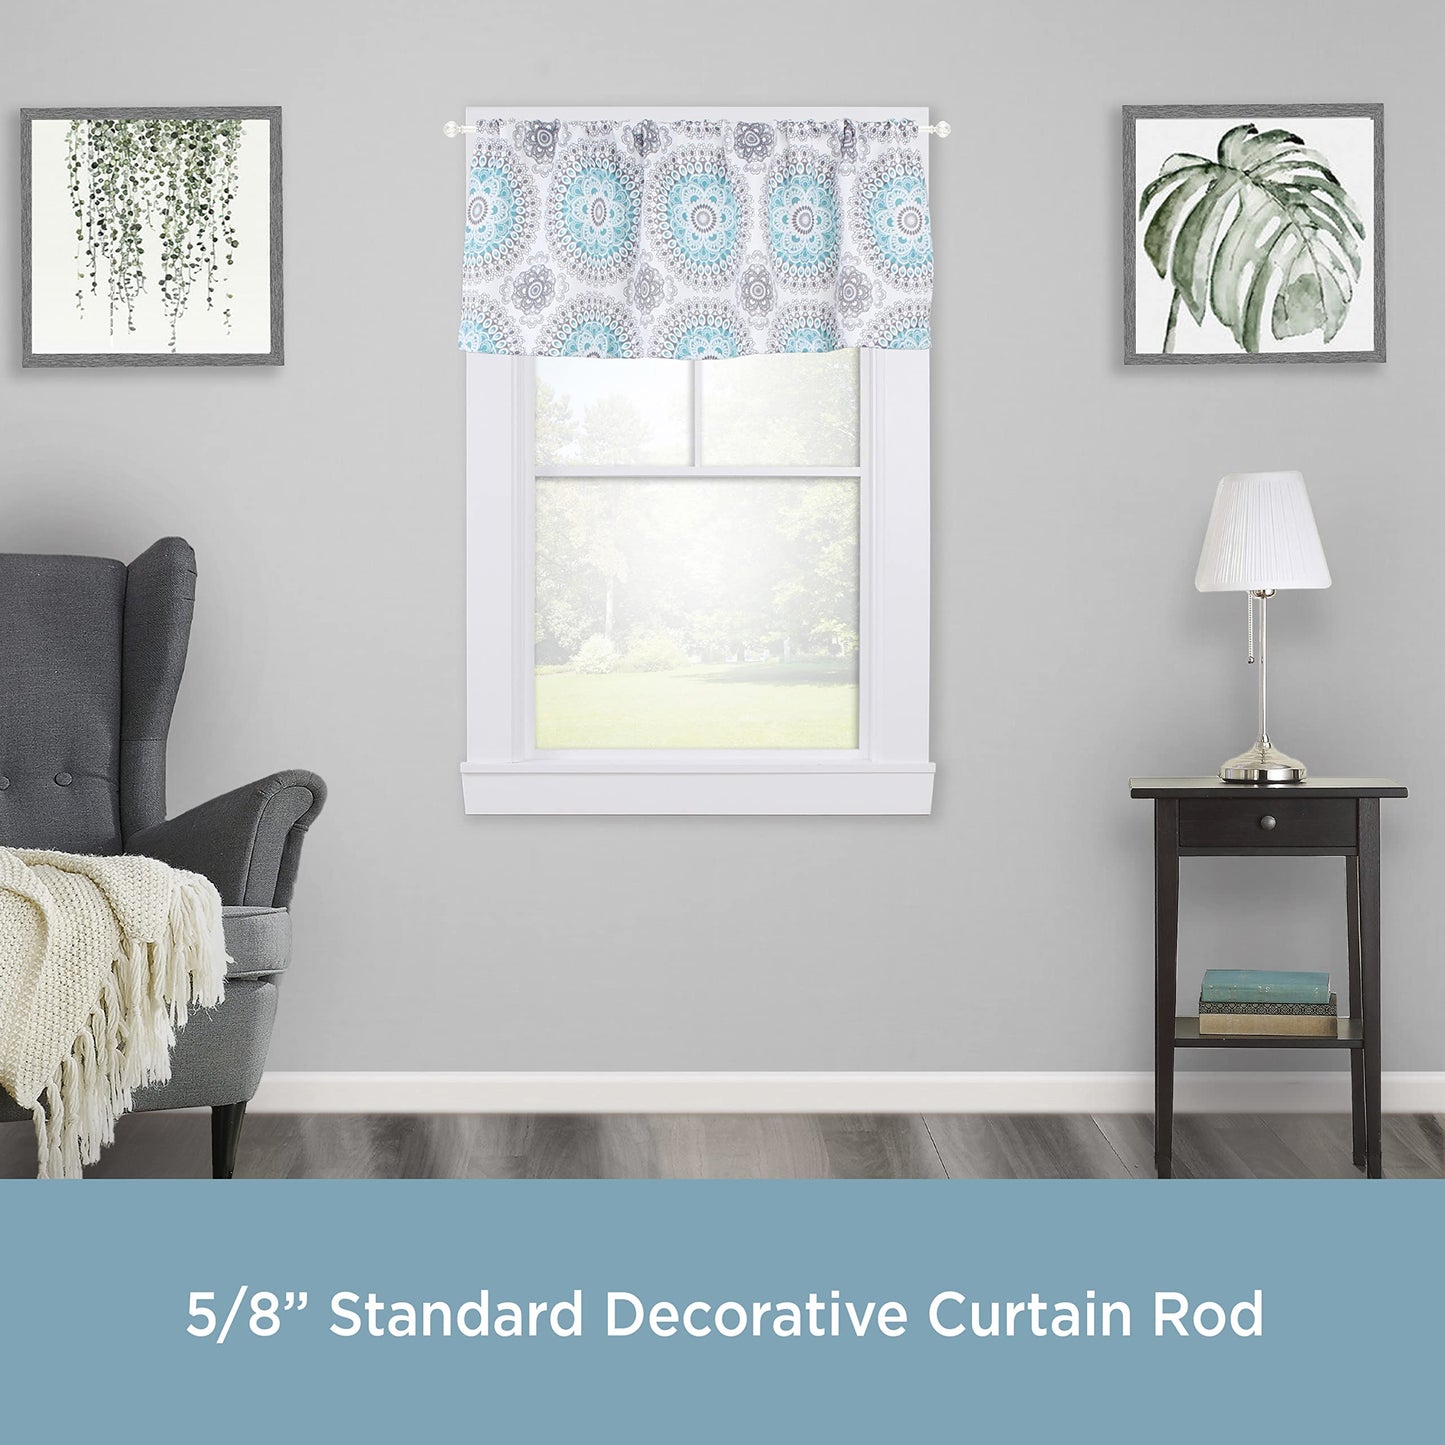 Anya 5/8” Standard Decorative Window Curtain Rod, 28-48, Brushed Nickel